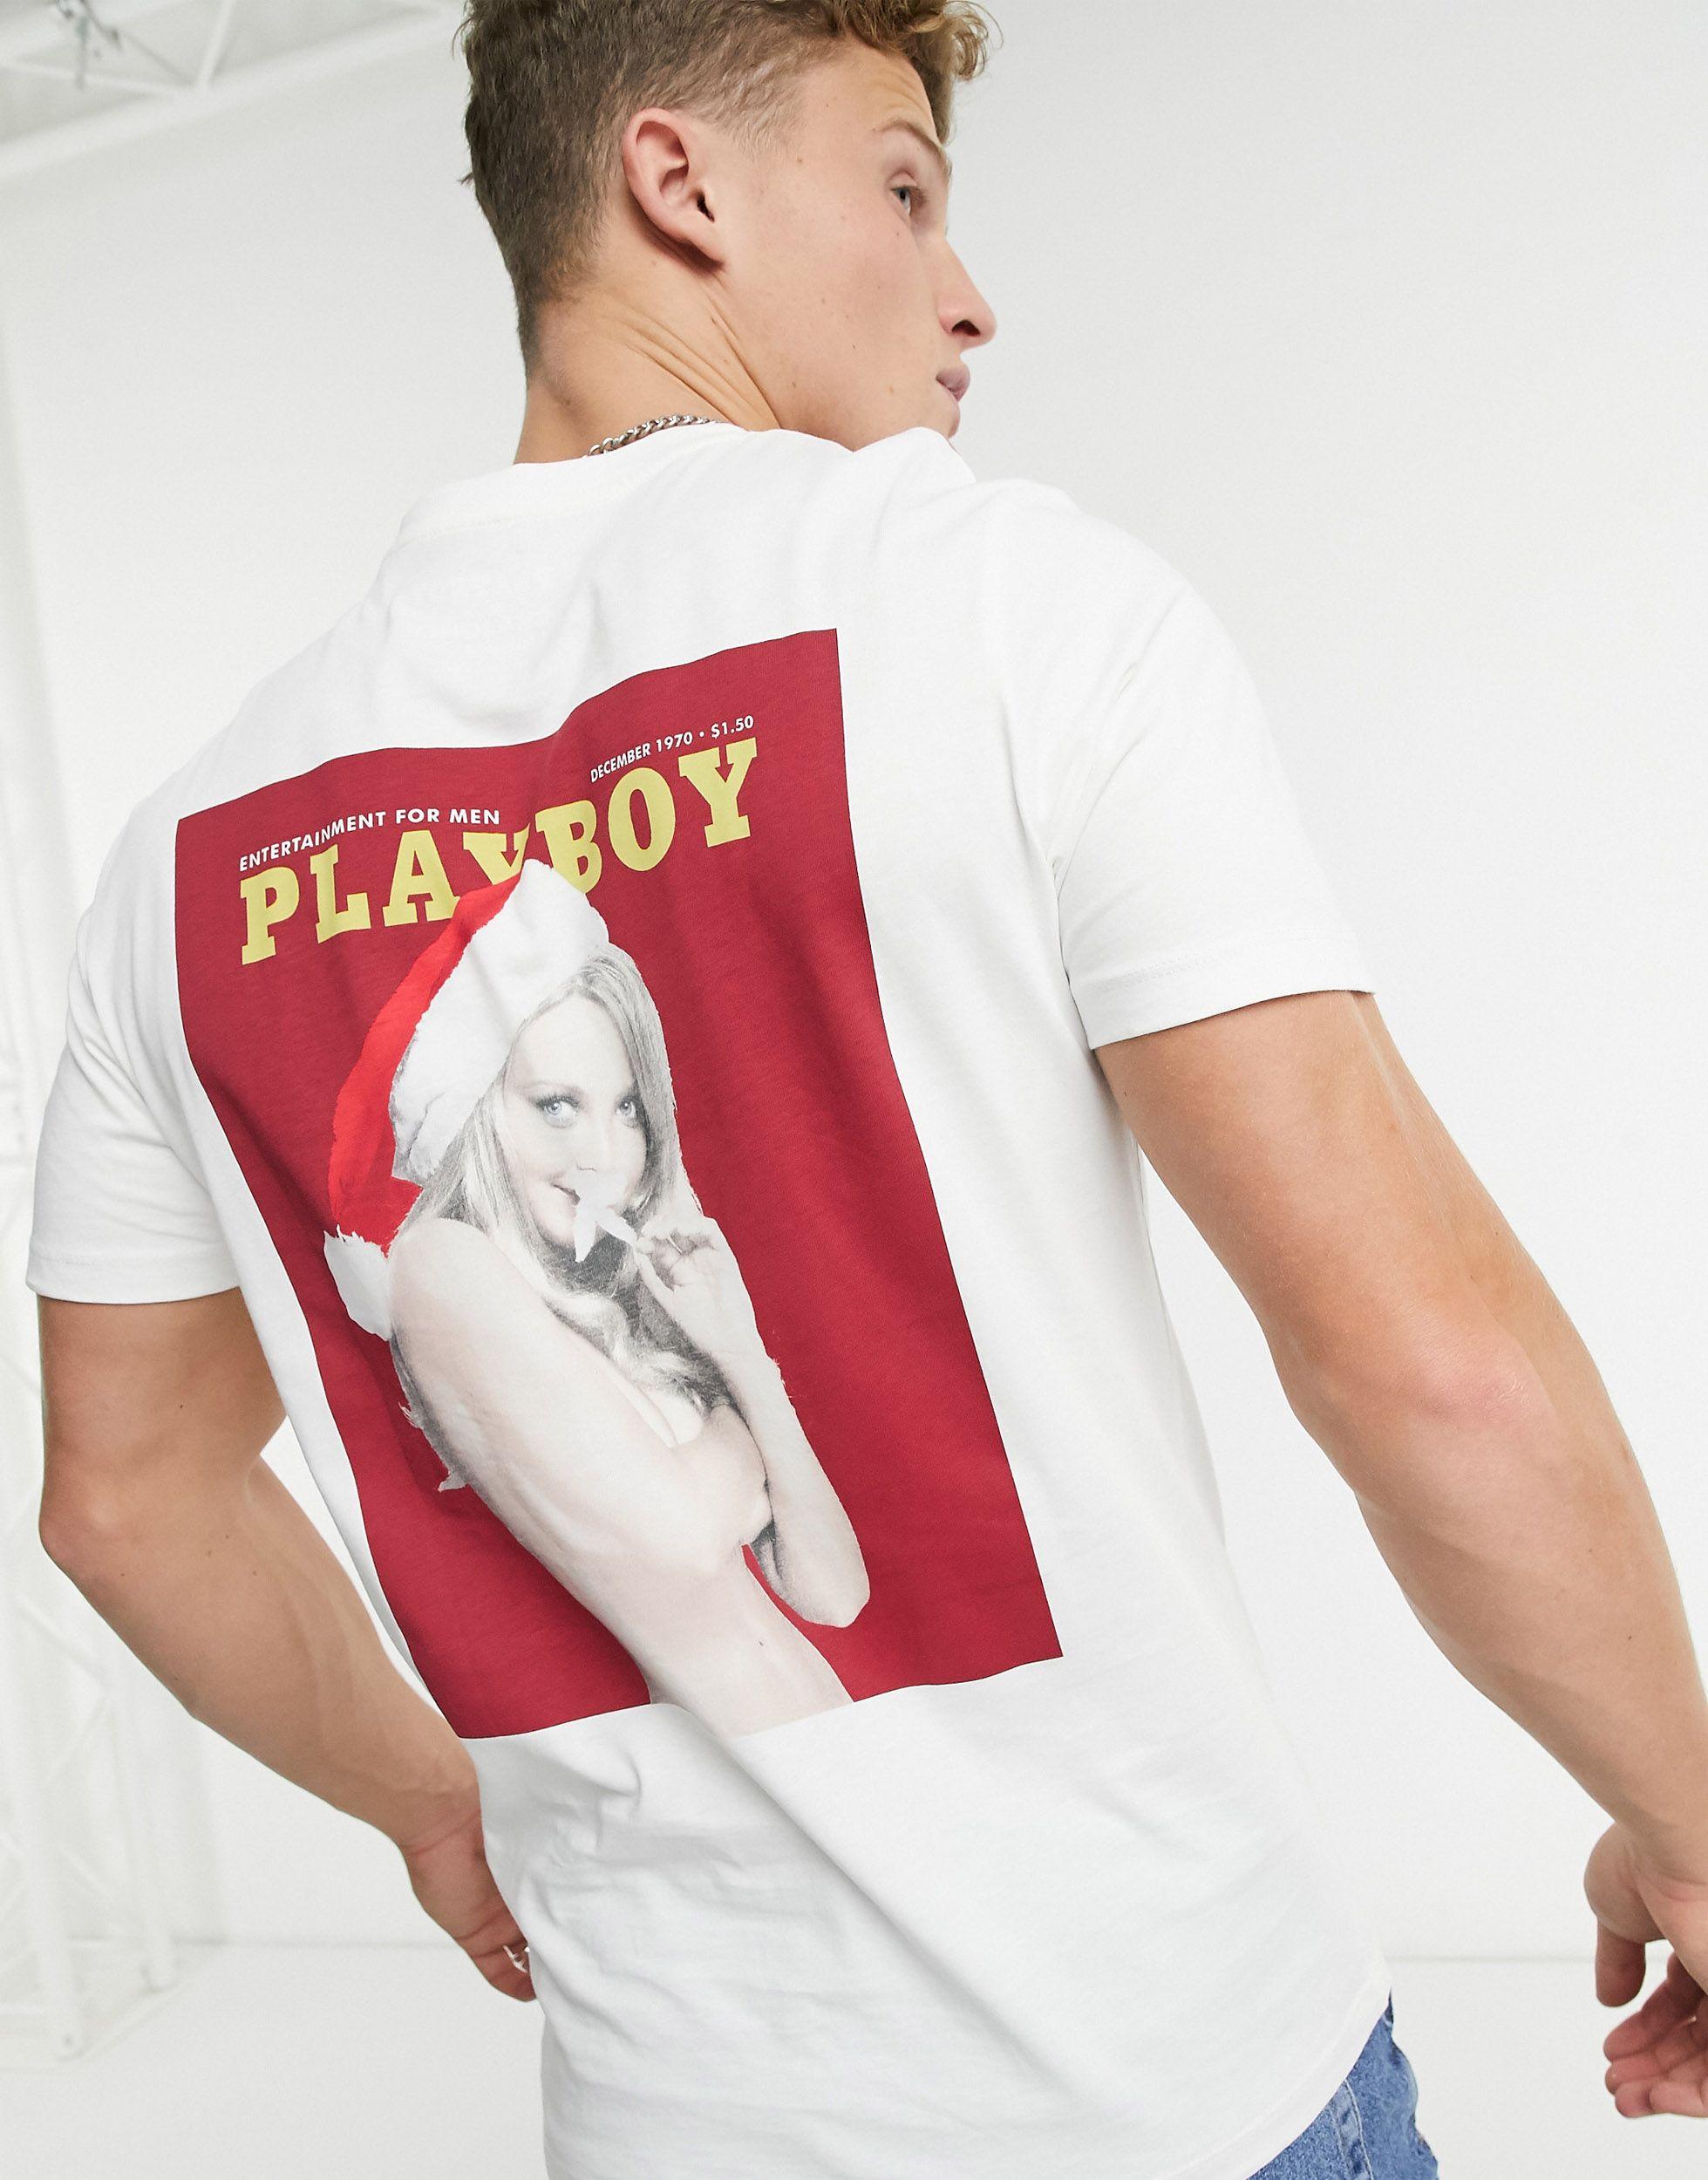 Jack & Jones Originals Christmas Playboy T-shirt in White for Men - Lyst